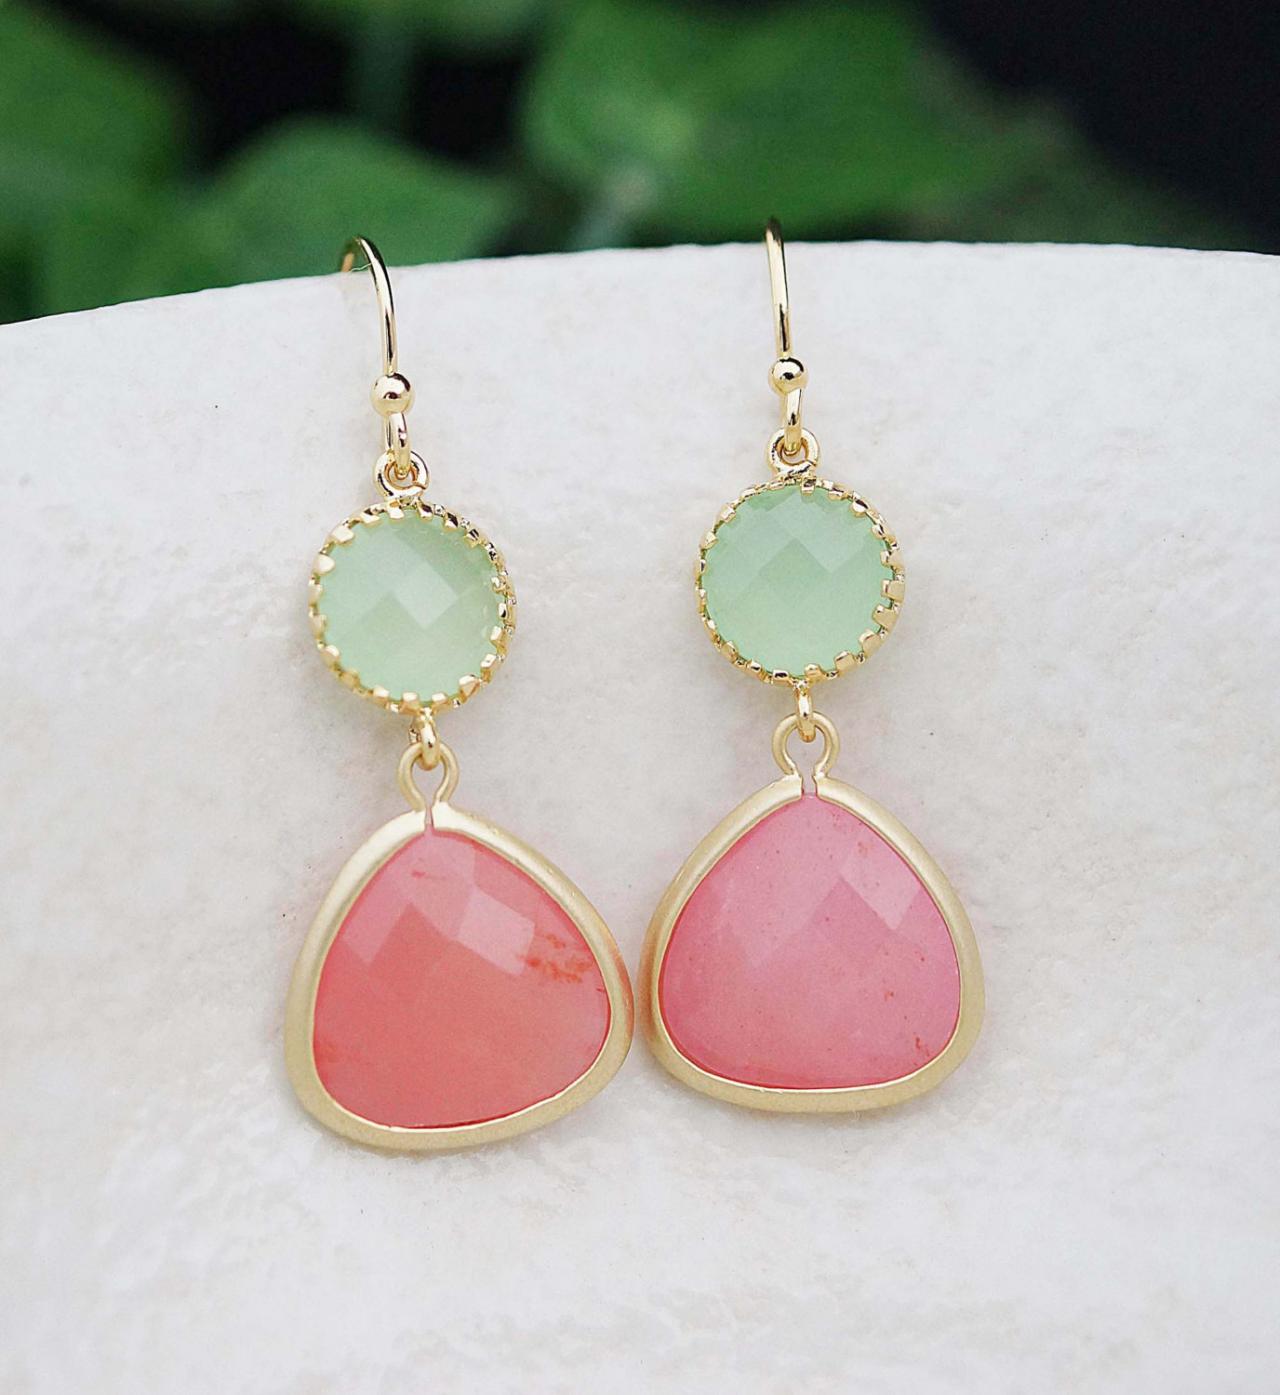 Wedding Jewelry Bridesmaid Earrings Dangle Earrings Gold Framed Baby Pink Jade And Light Apple Green Drop Earrings